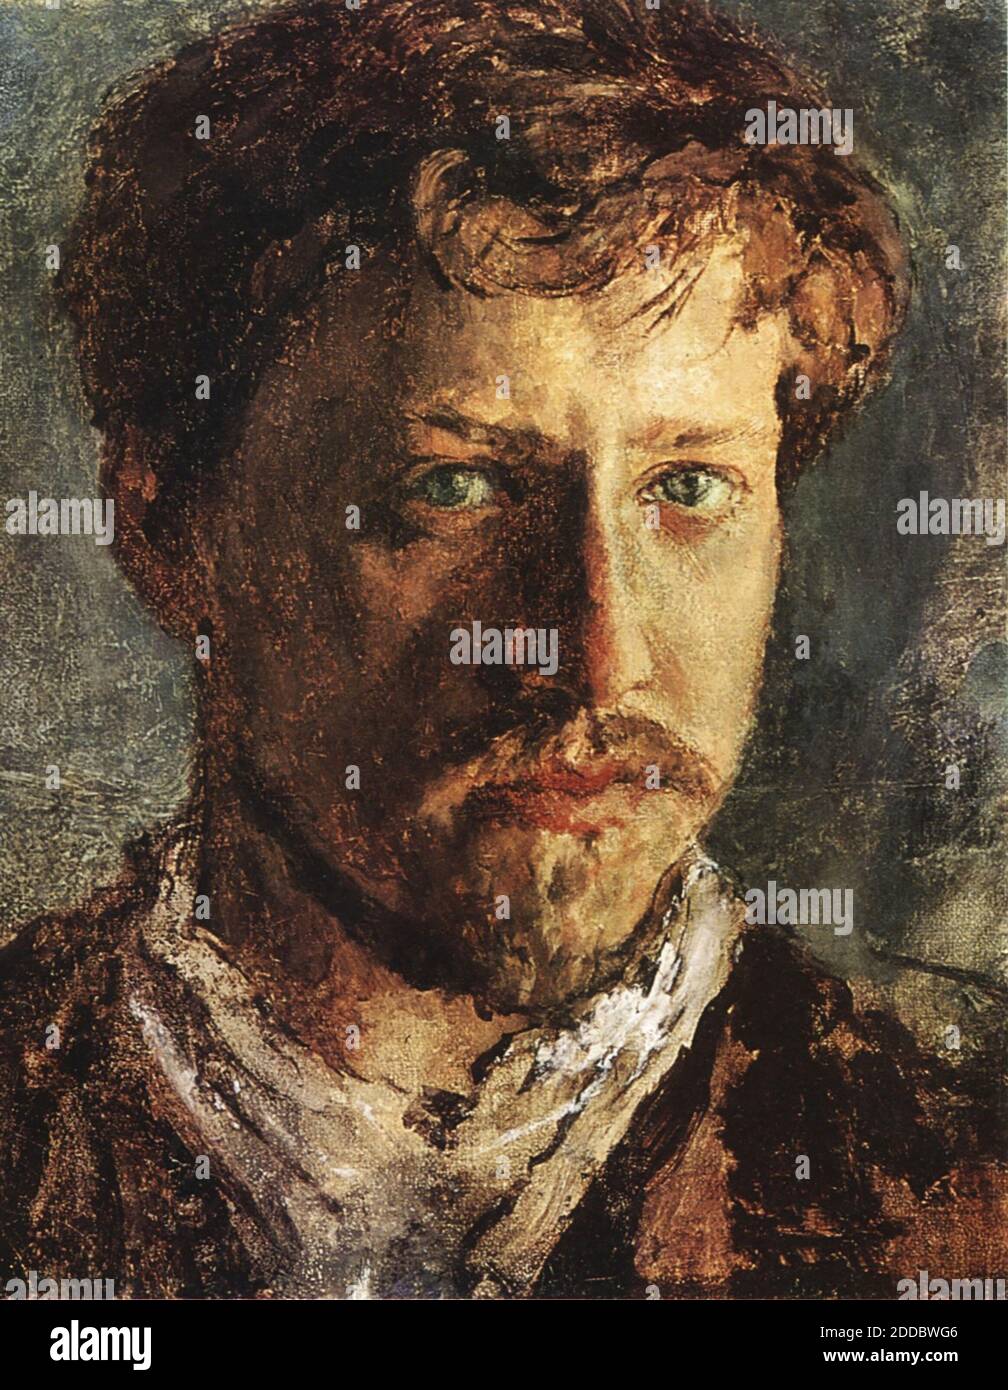 VALENTIN SEROV (1865-1911) Russian painter - self portrait about 1885. Stock Photo